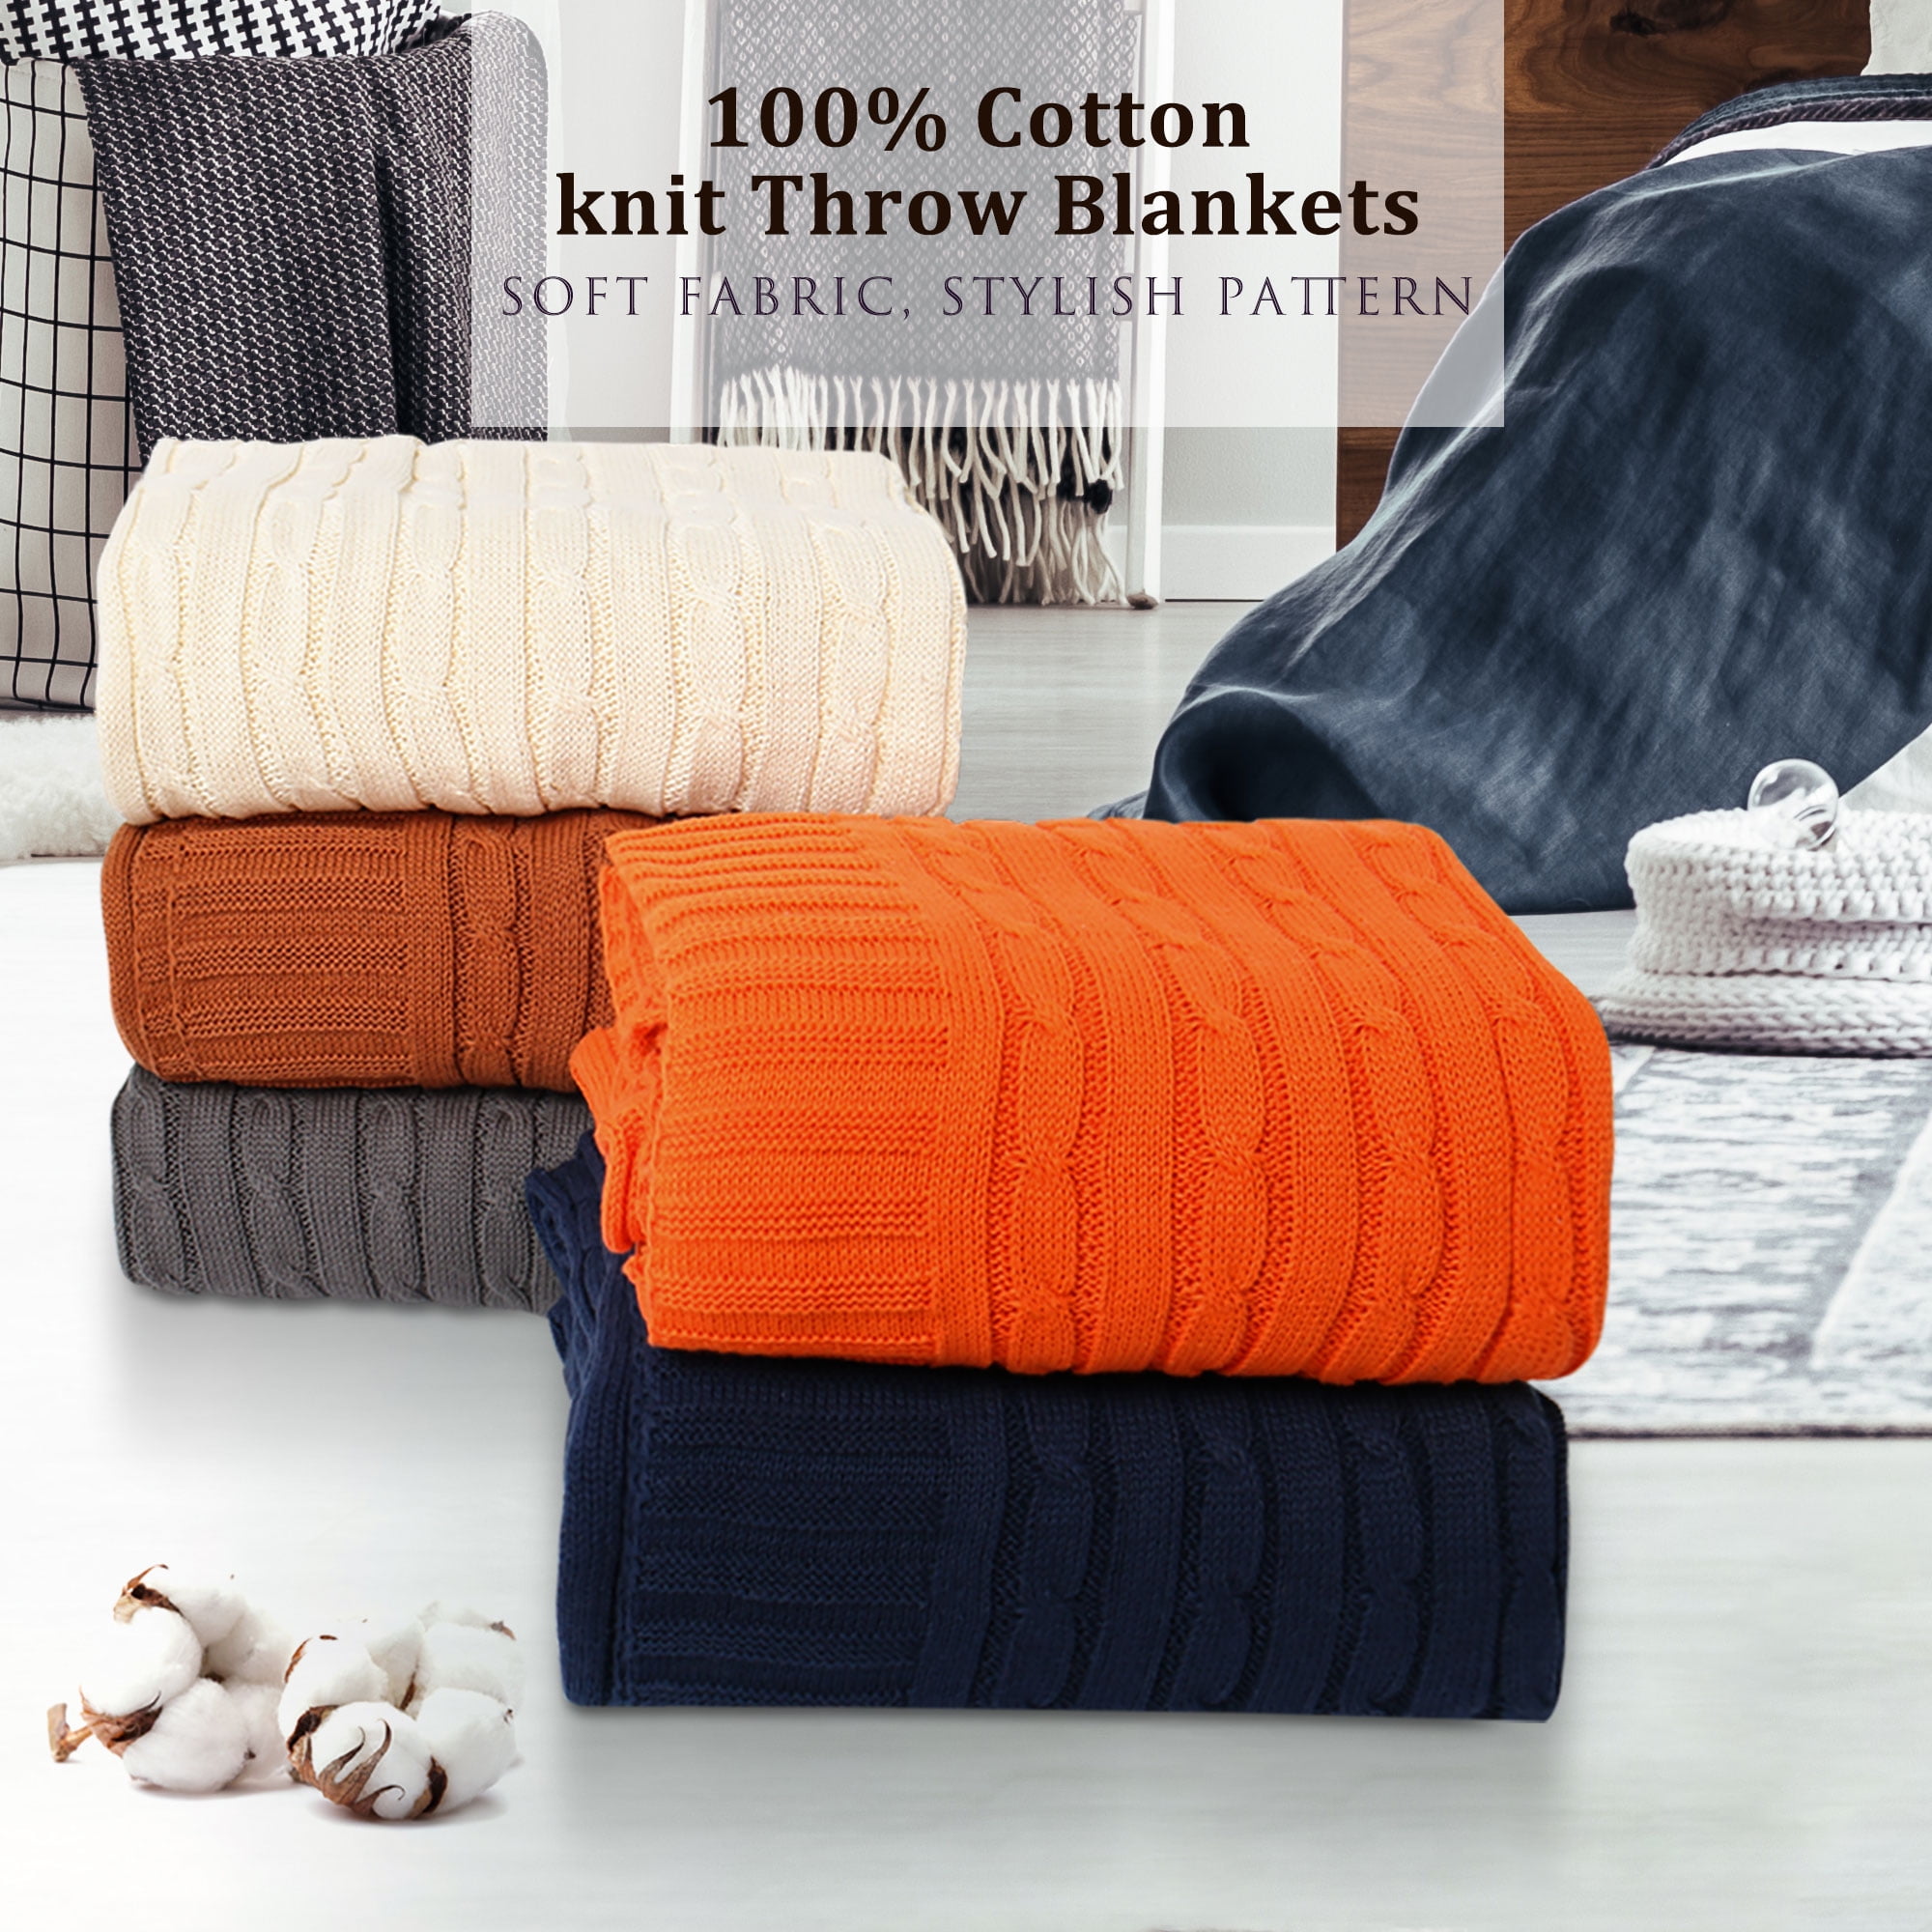 Super Soft Warm Cotton Knit Throw Blanket Sofa Bed Decorative